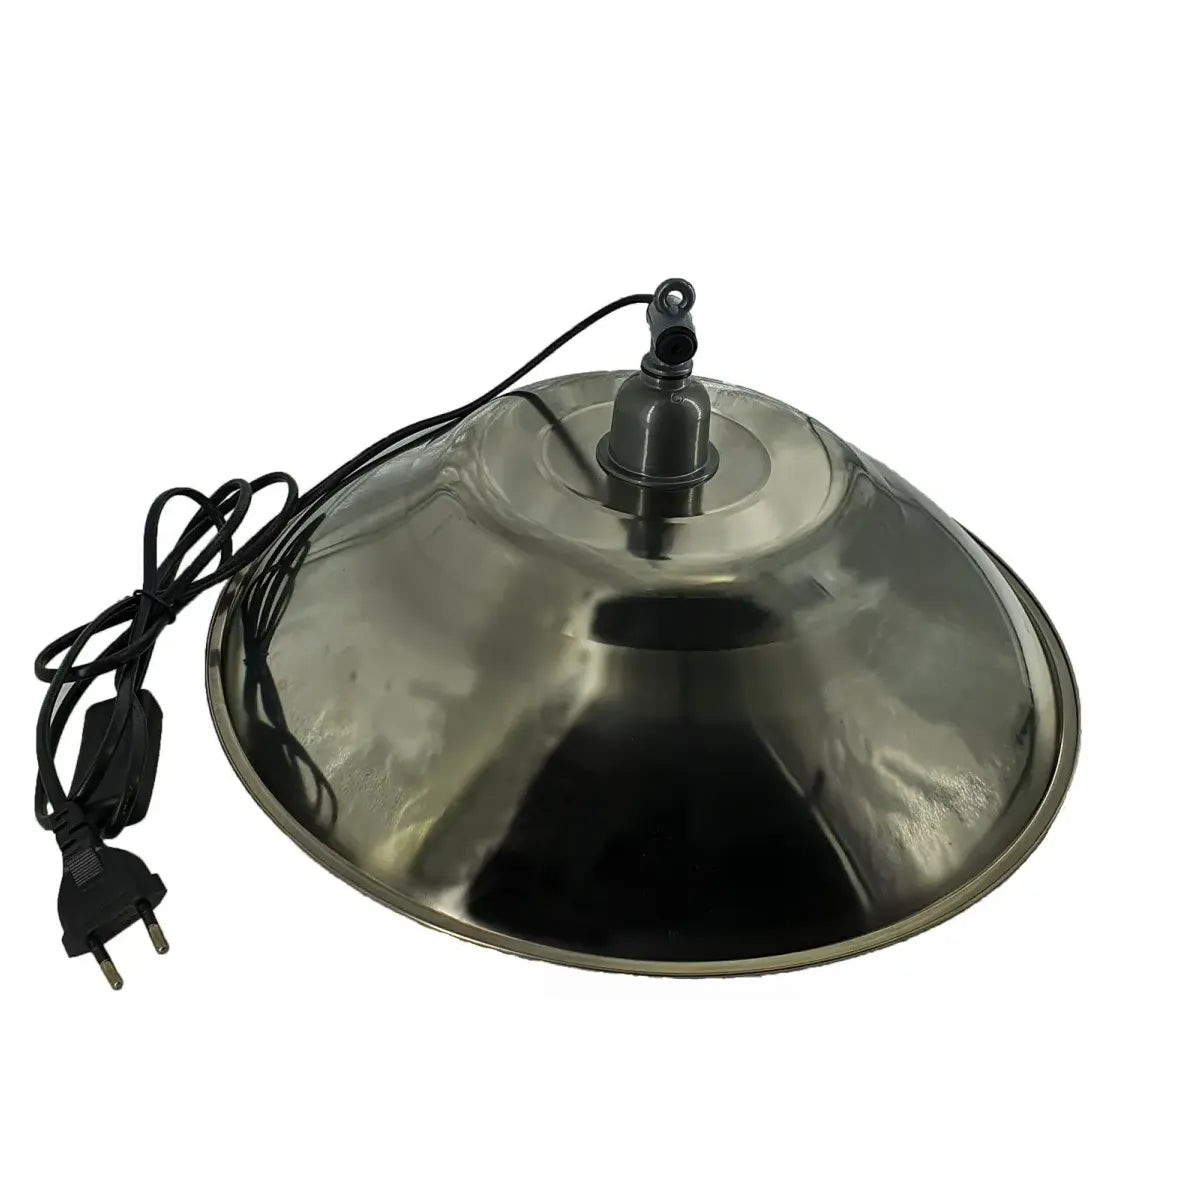 Lampa din inox pentru bec cramic/ infrarosu, model S110, Tehno Ms #144 - ZEP.RO - Ți-e la îndemână!